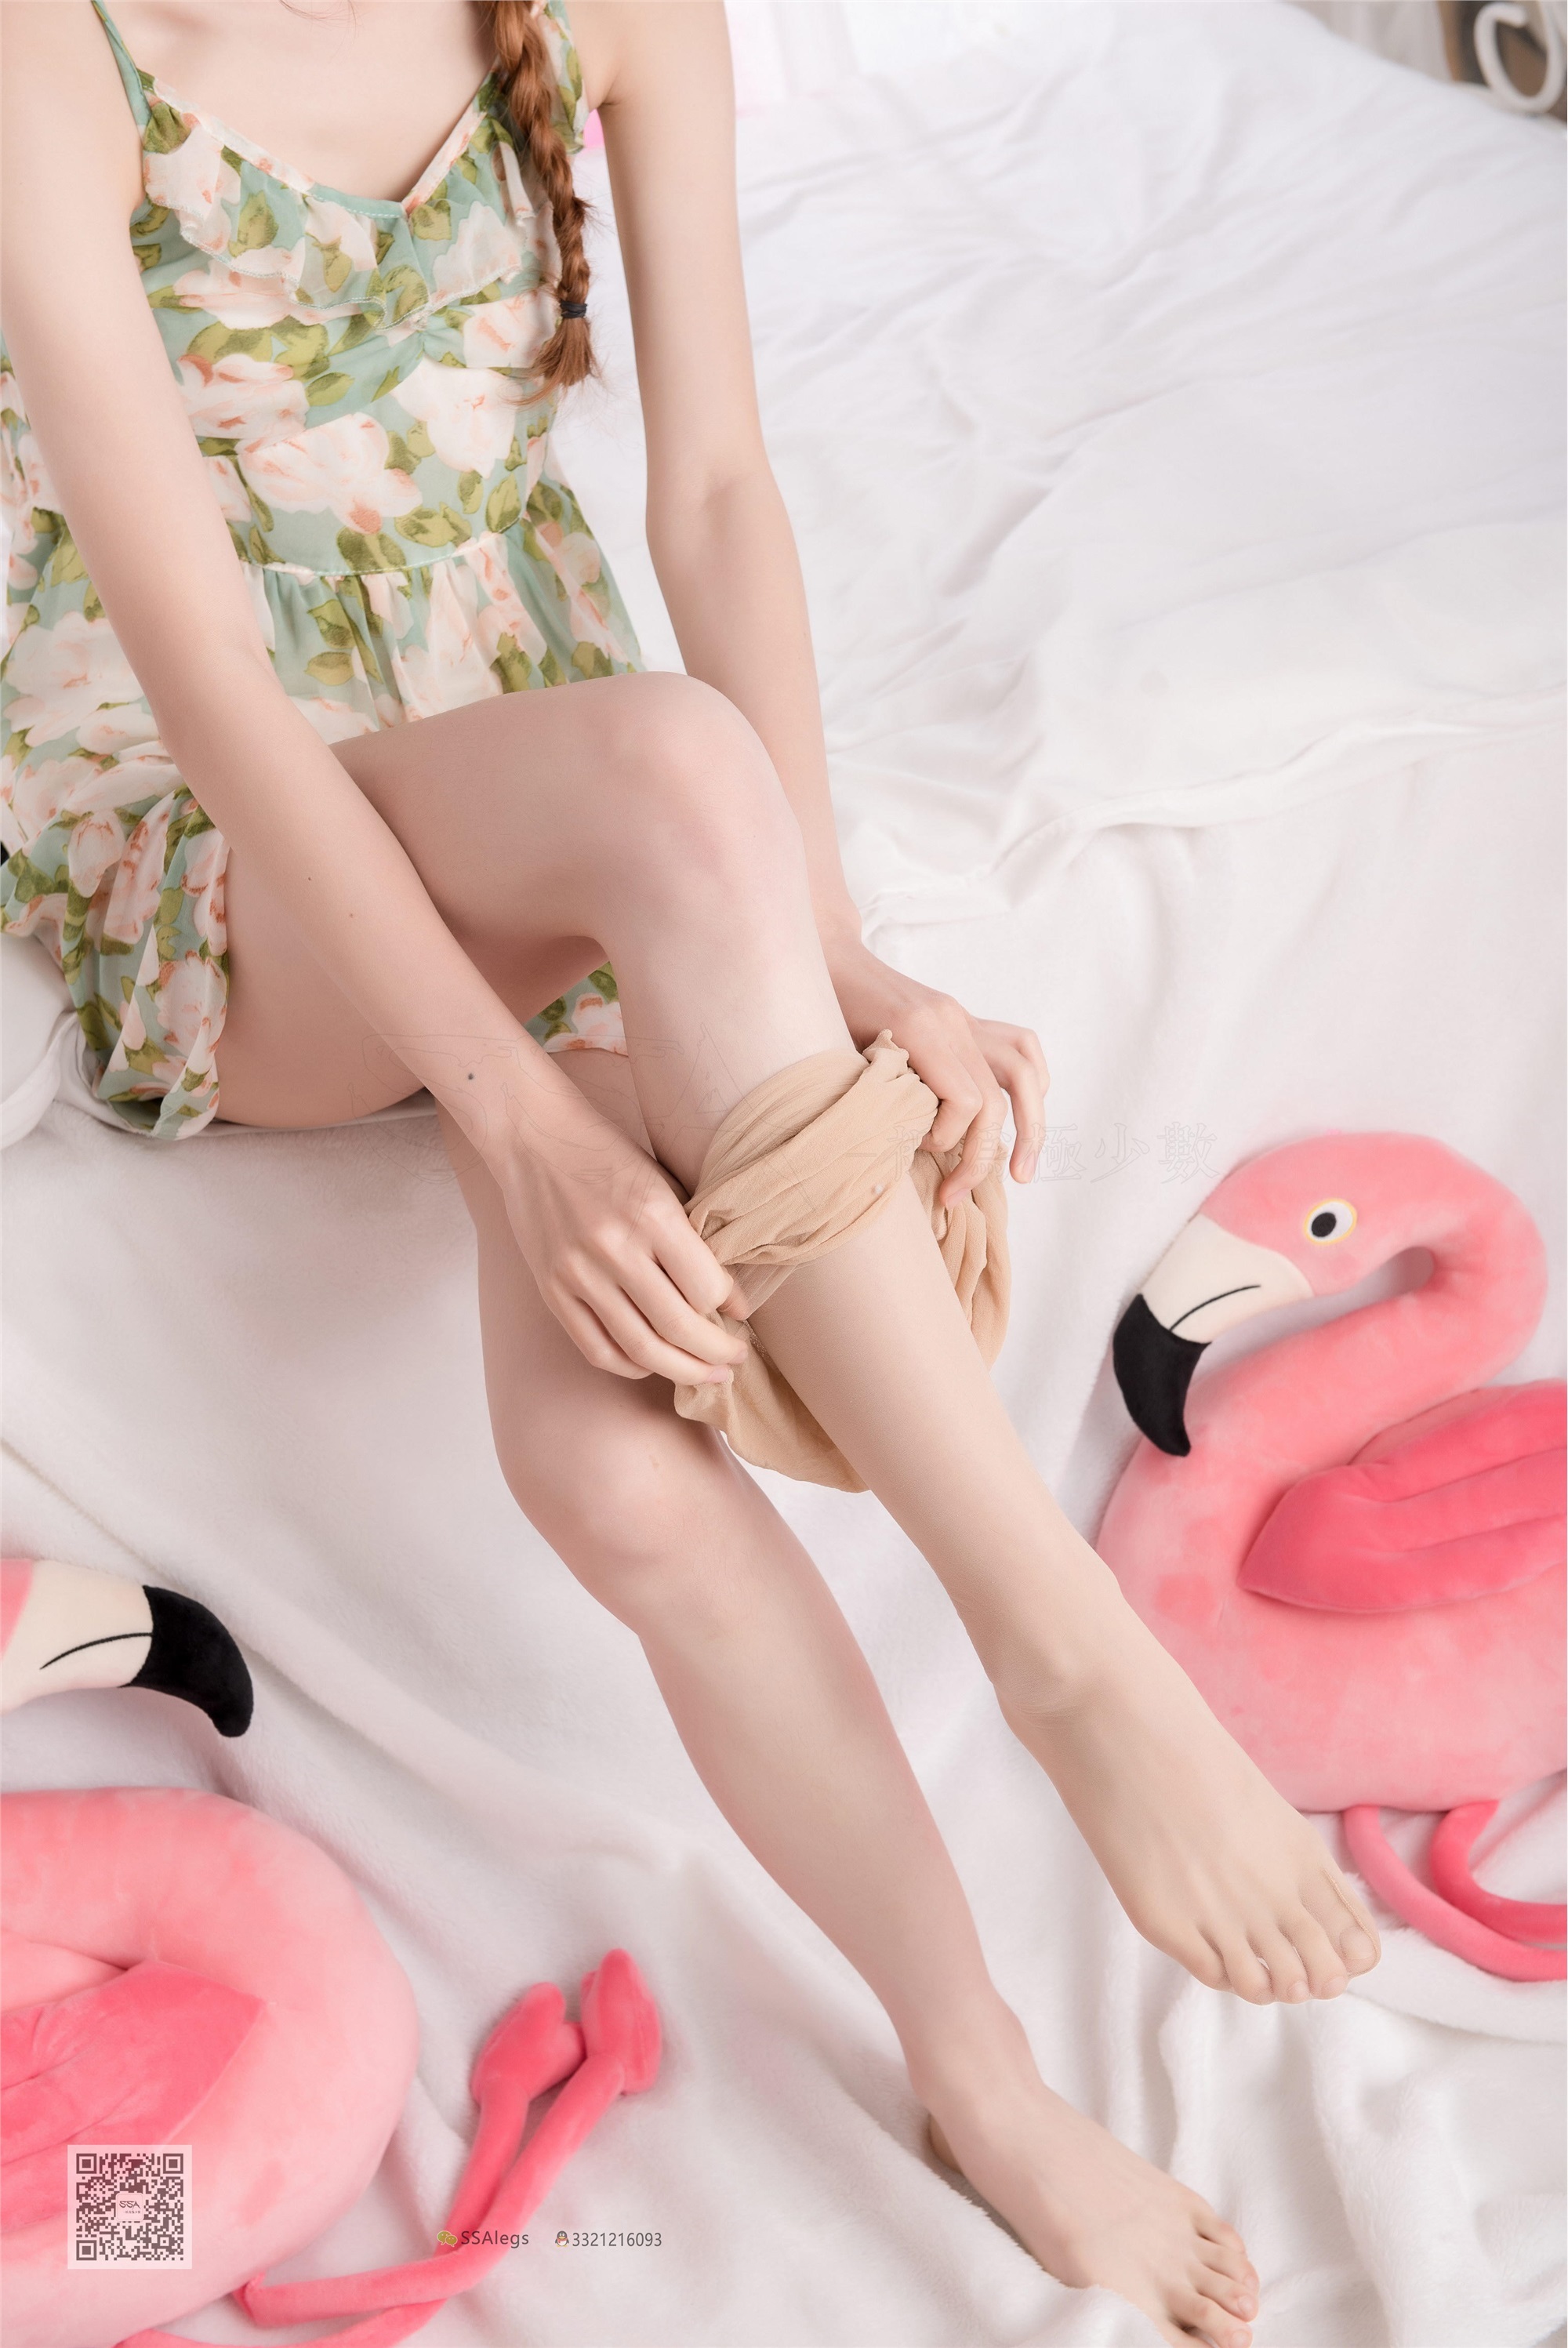 SSA silk society no.022 little Qiqi incarnate soul painter import meat Si big long legs feet close up